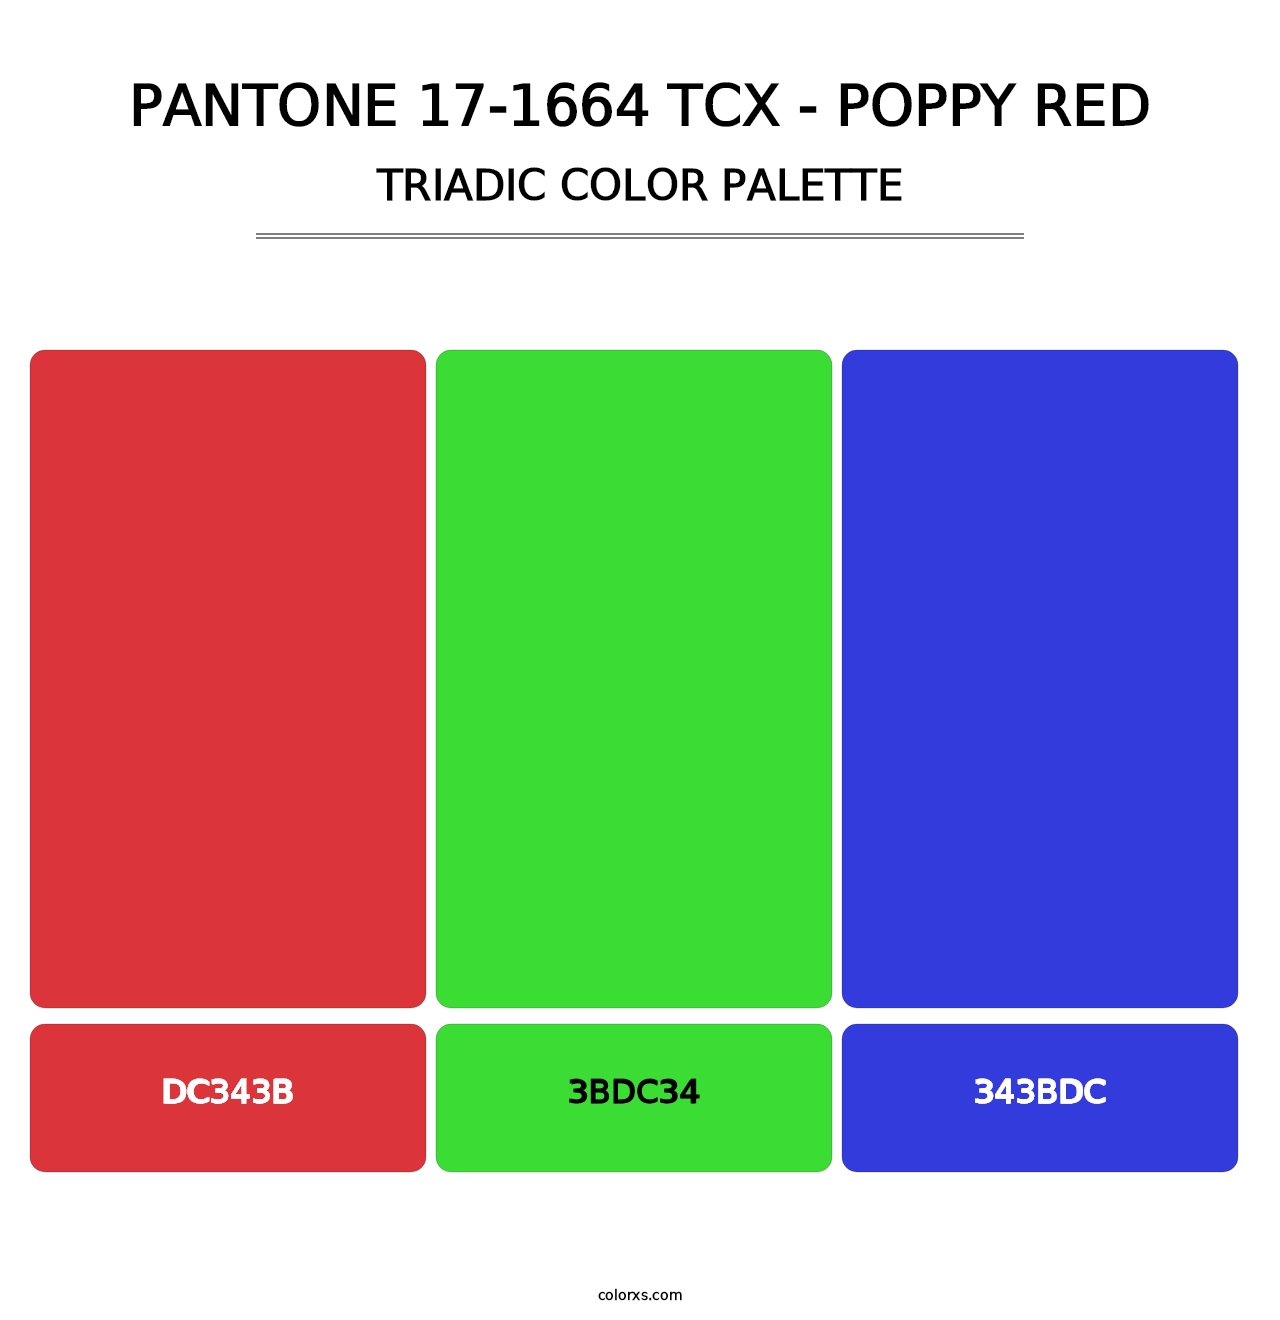 PANTONE 17-1664 TCX - Poppy Red - Triadic Color Palette